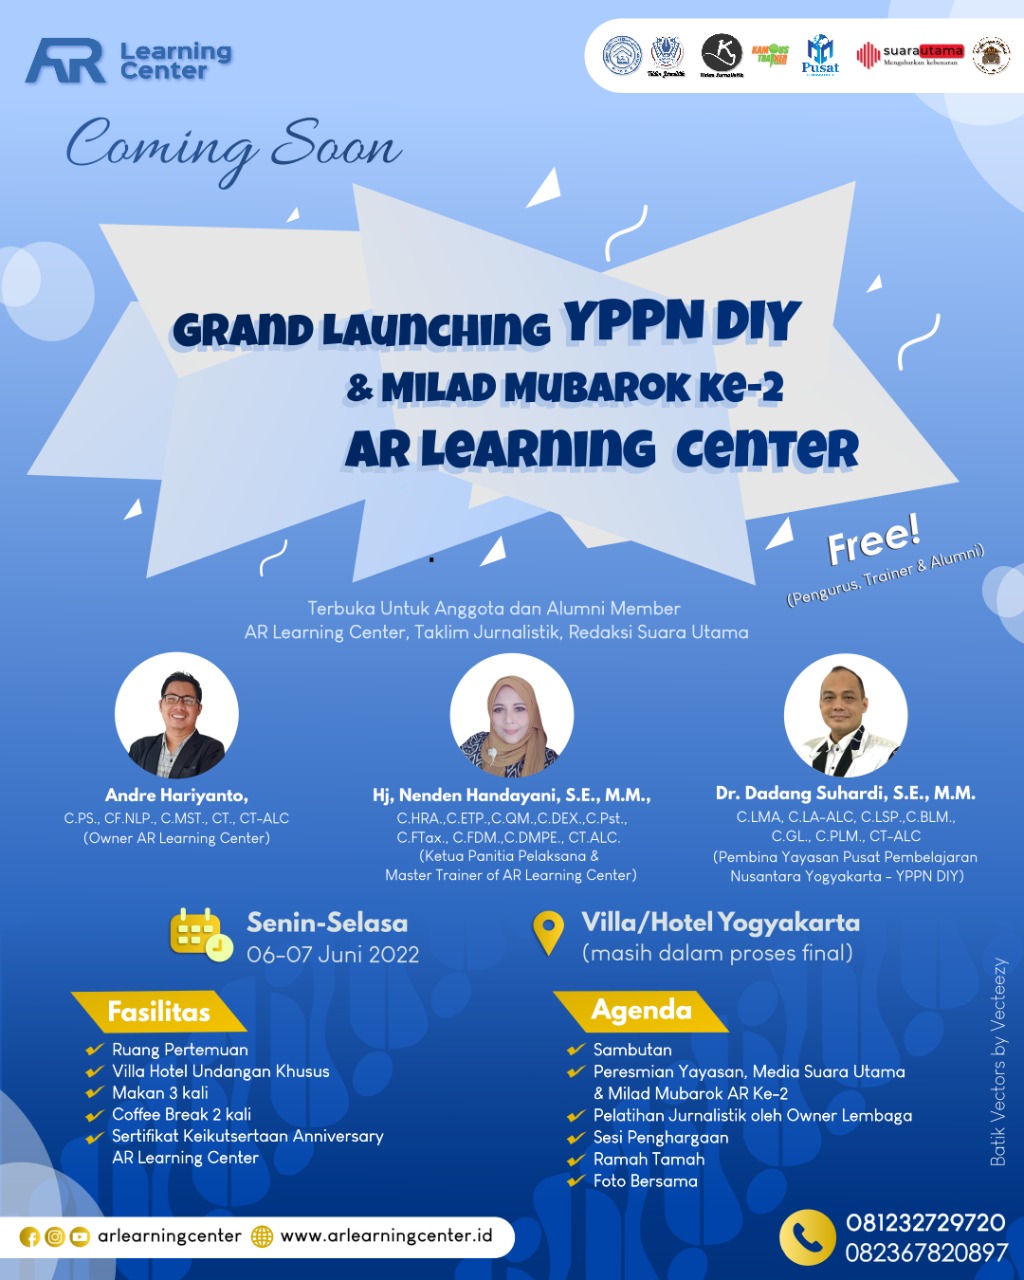 Foto: Grand launching YPPN DIY & milad mubarok ke-2 AR Learning Center/Suara Utama 